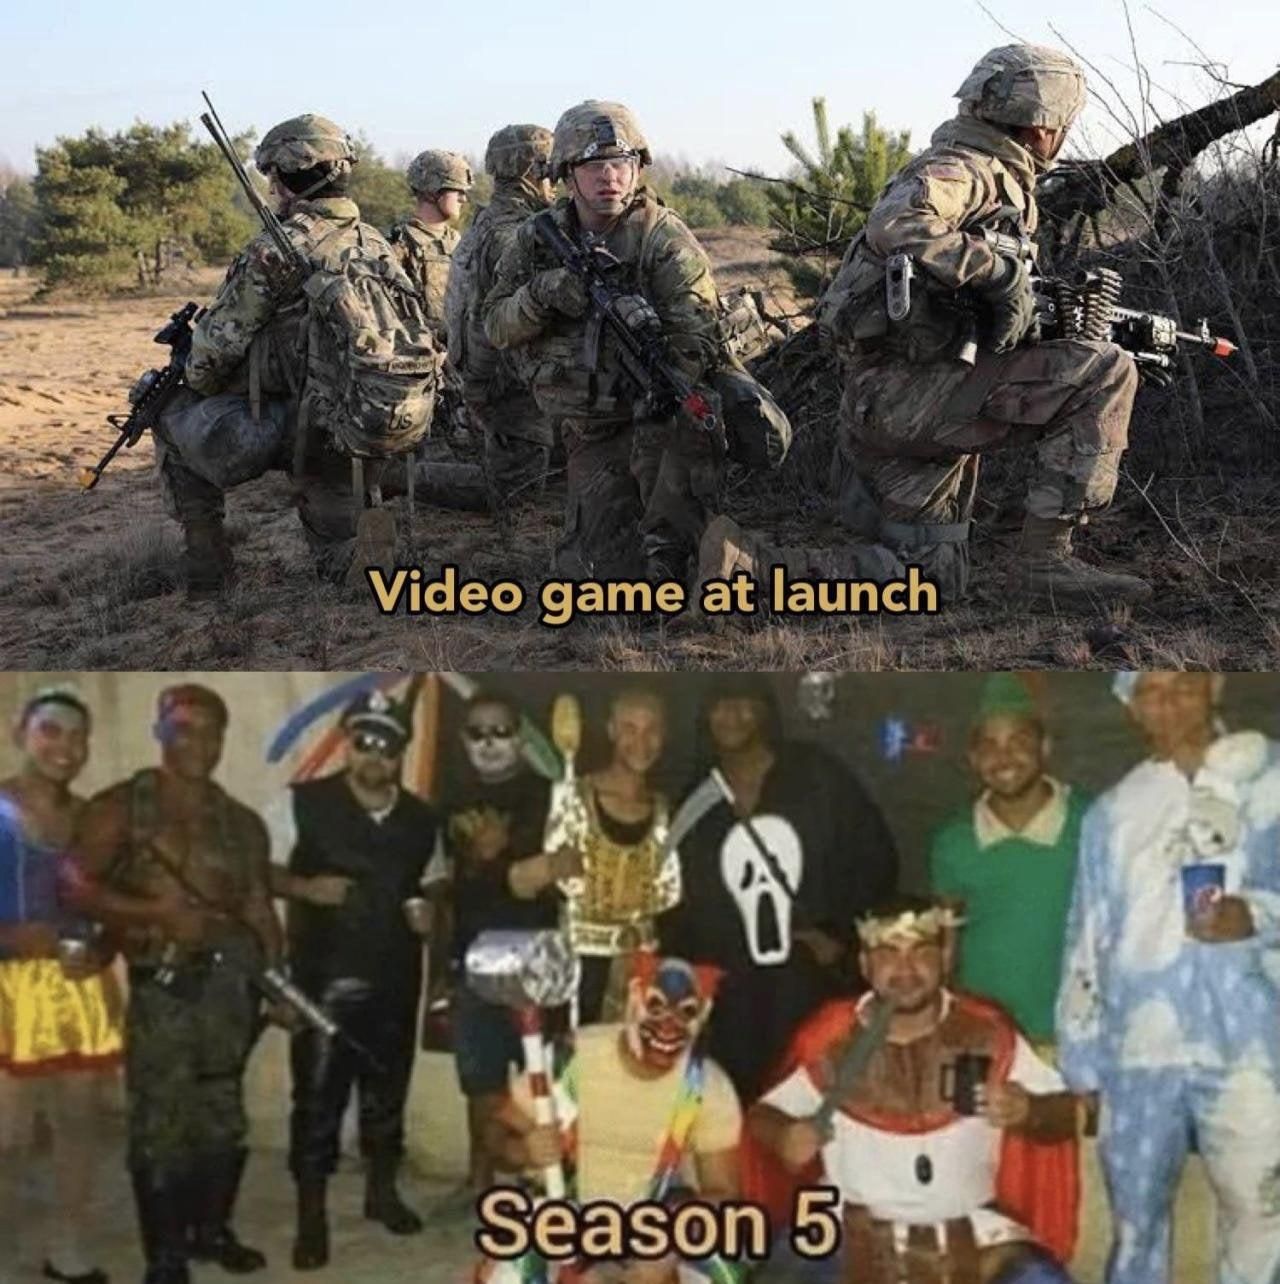 video games at launch, season 5